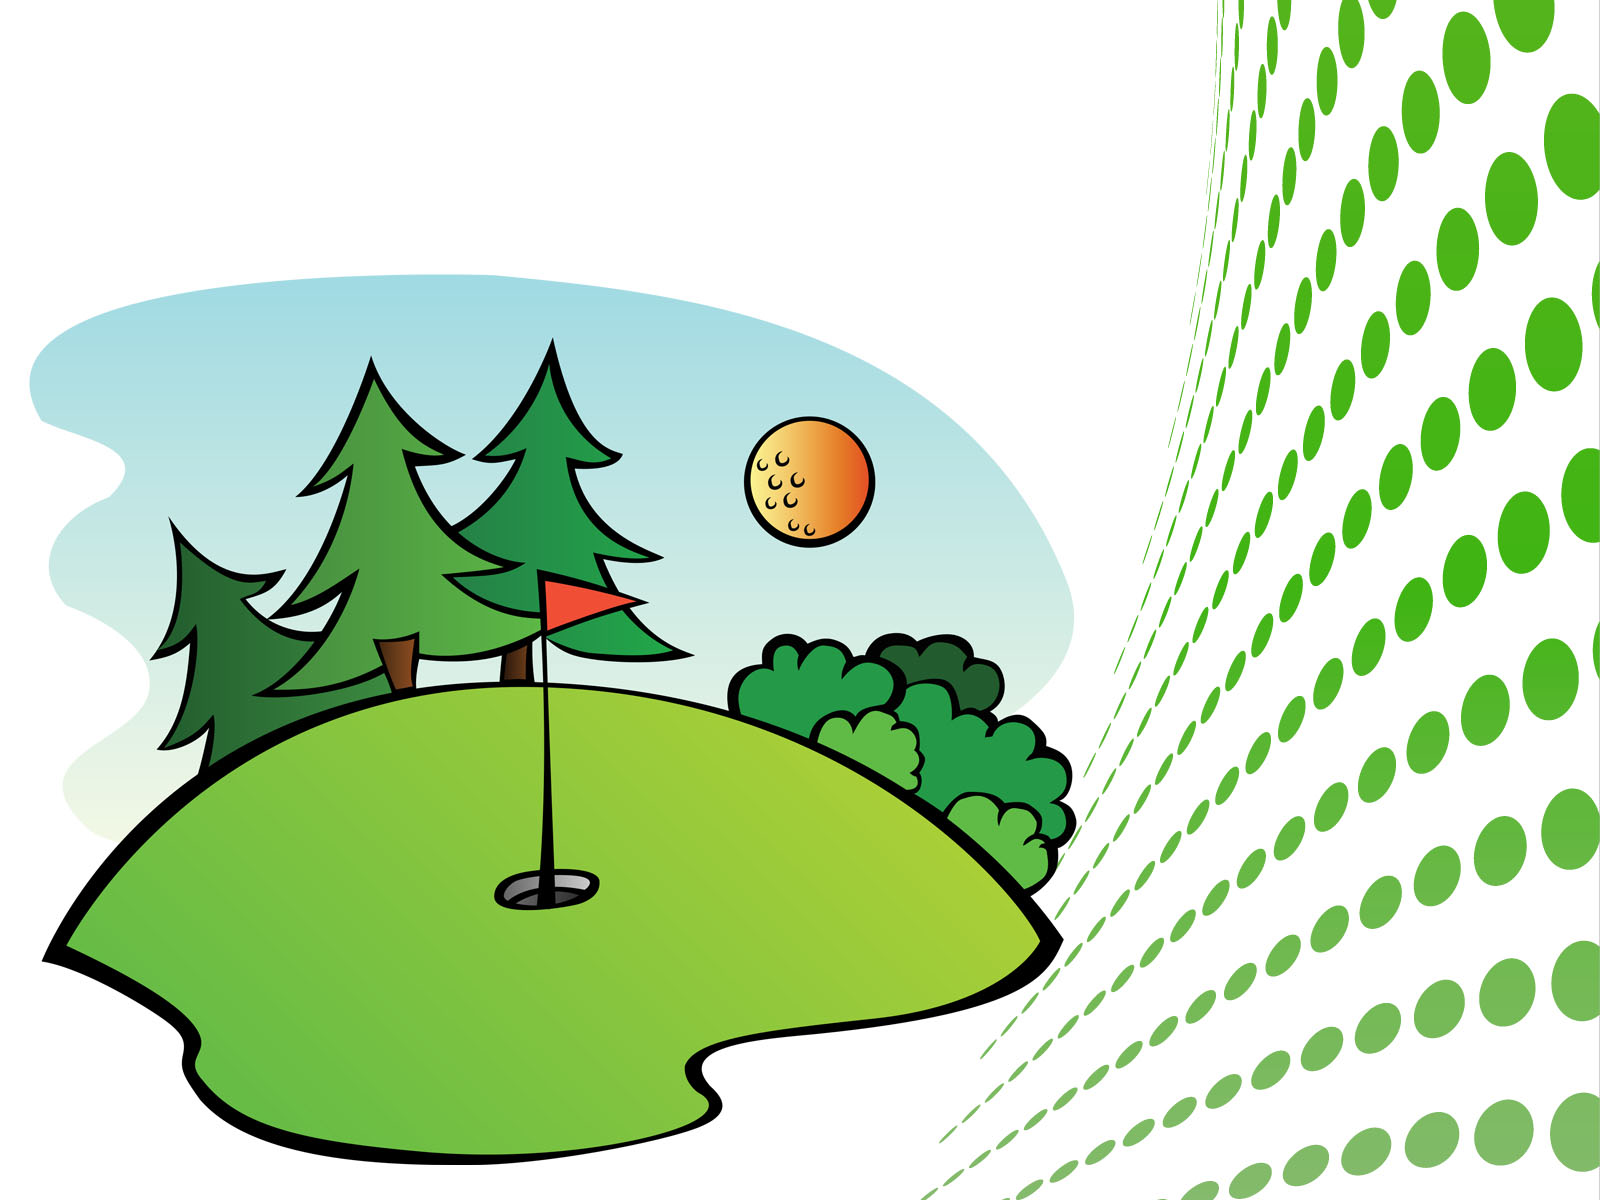 Free Golf Course Clip Art Wallpapers High Definition - Kemecer.com